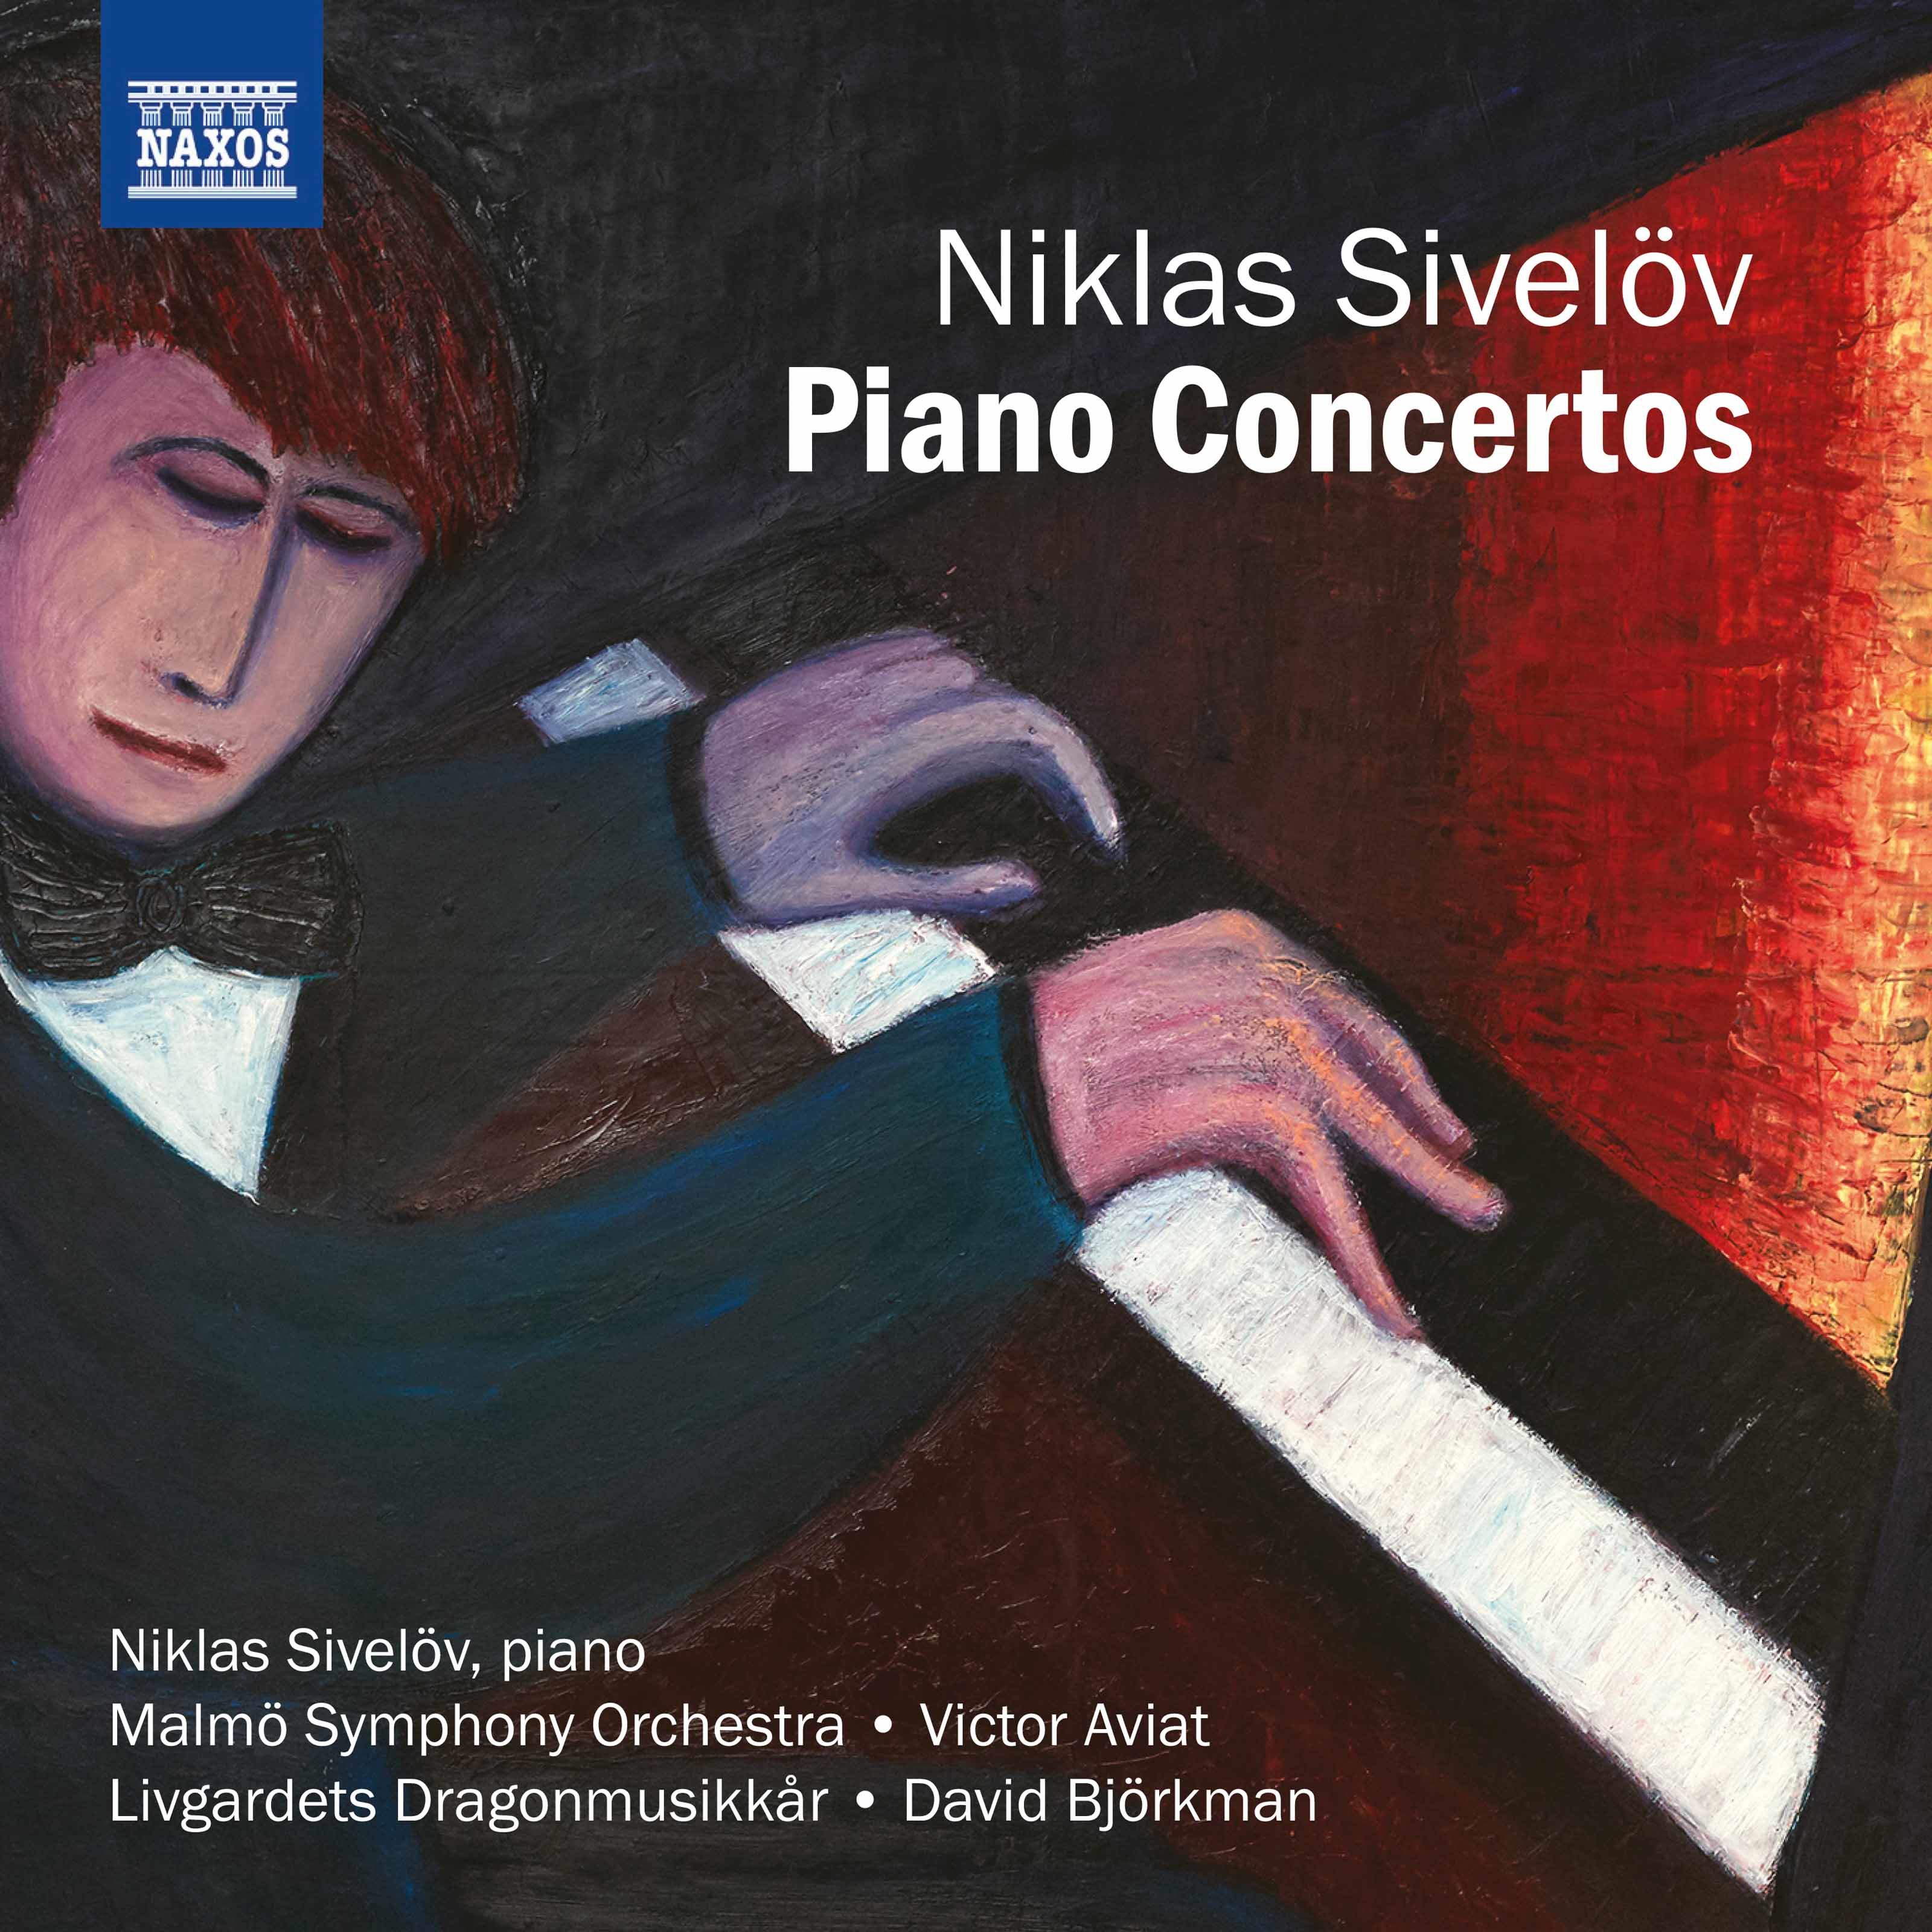 Niklas Sivelov - Niklas Sivelov Piano Concertos (2020) [FLAC 24bit/192kHz]